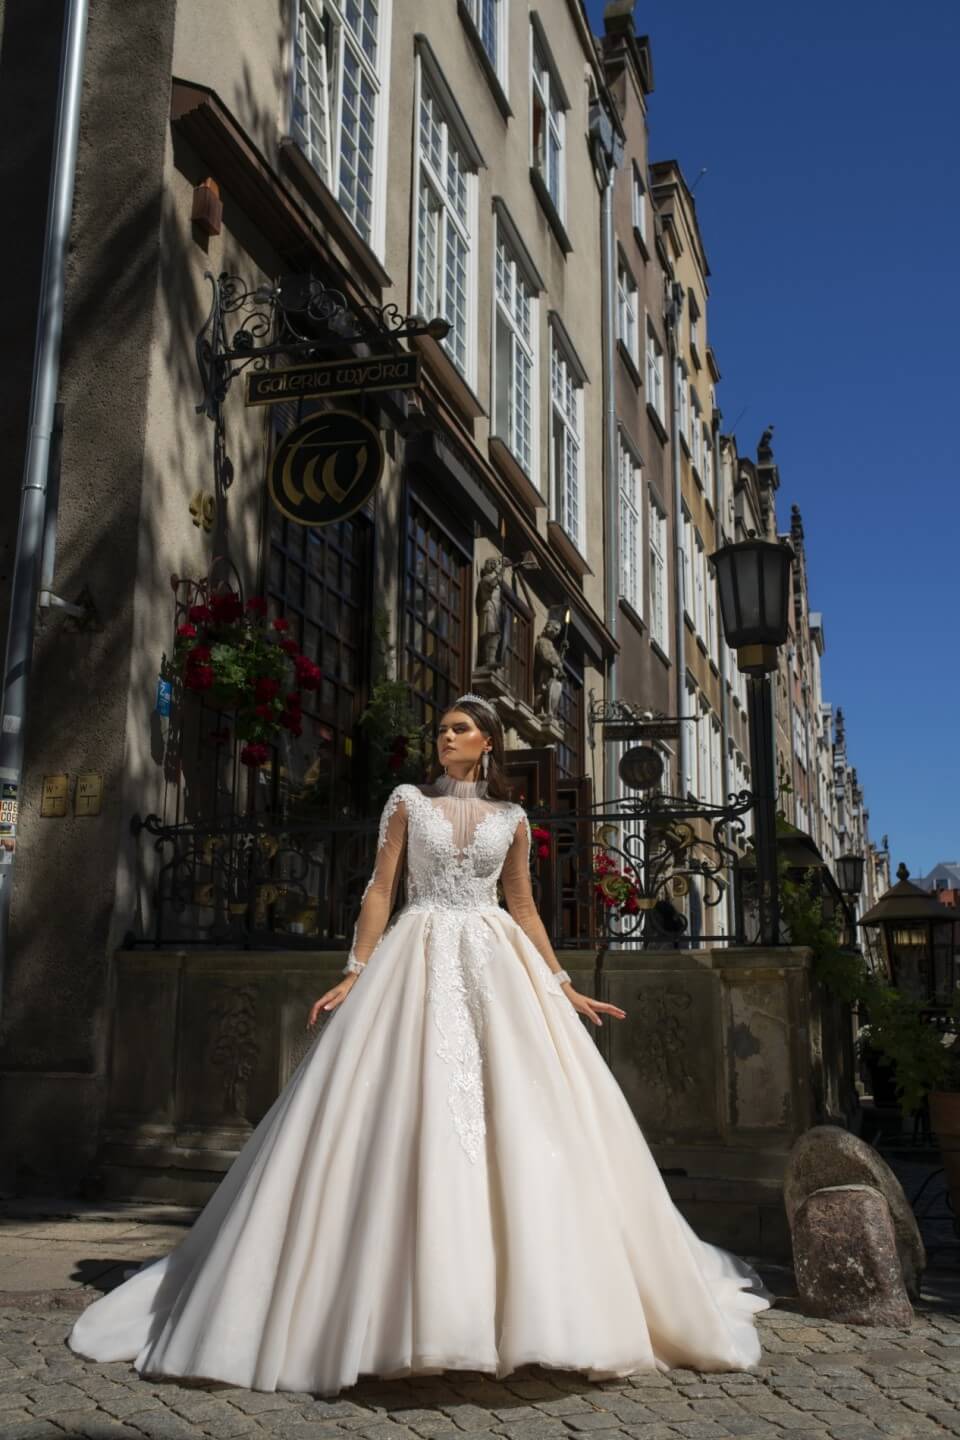 T202008 Illusion Bodice , V-neck Lace Bridal Gown Wedding Dress